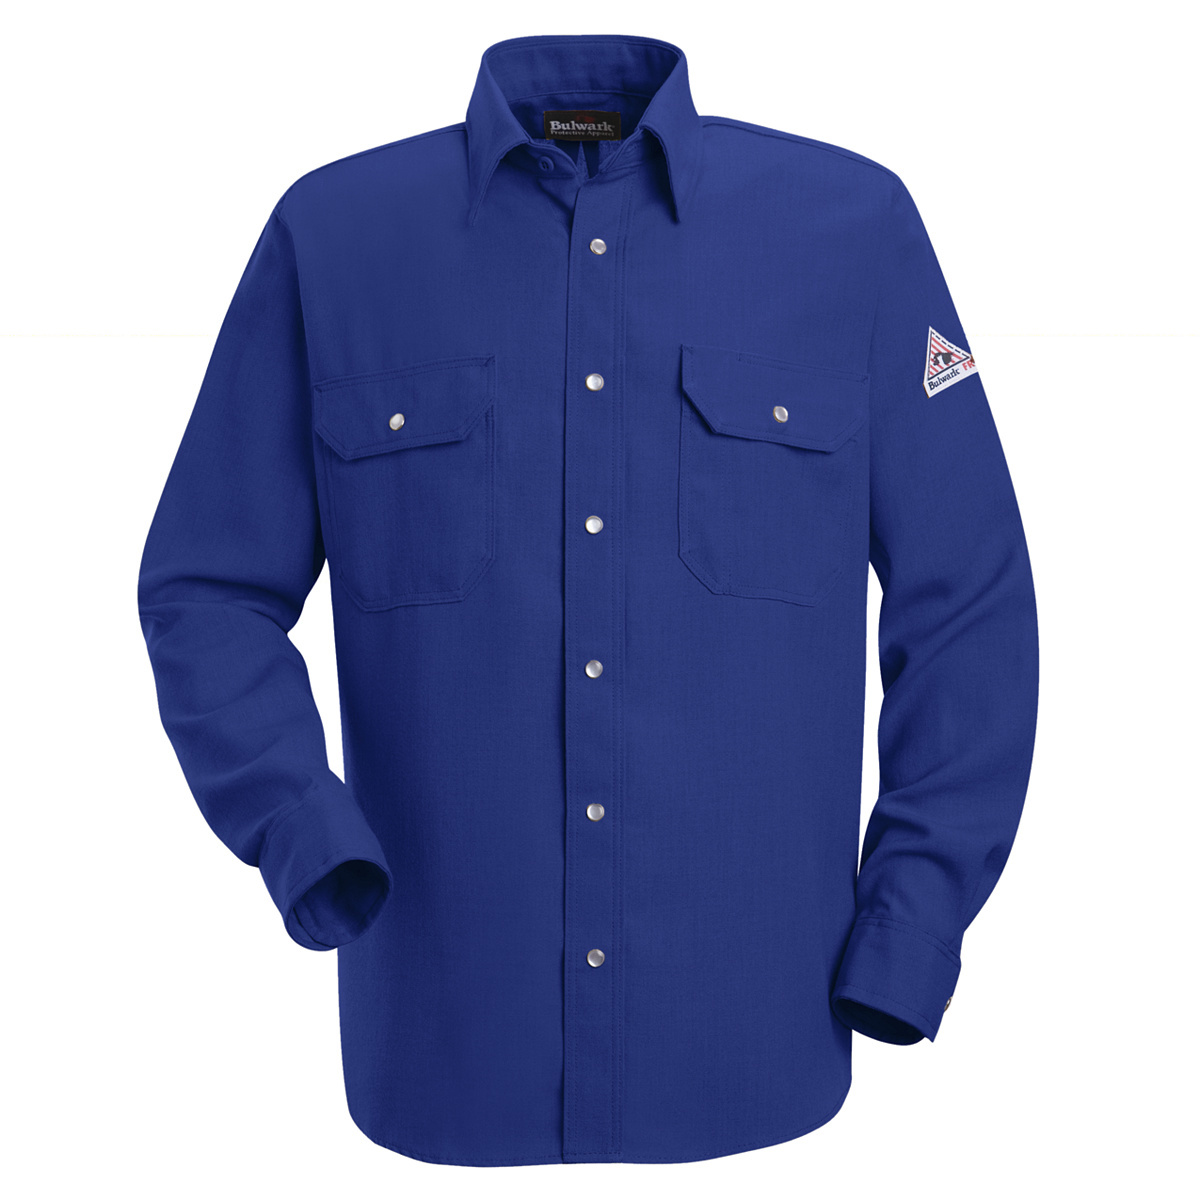 Bulwark® X-Large Tall Royal Blue Nomex® IIIA/Nomex® Aramid/Kevlar® Aramid Flame Resistant Uniform Shirt With Snap Front Closure